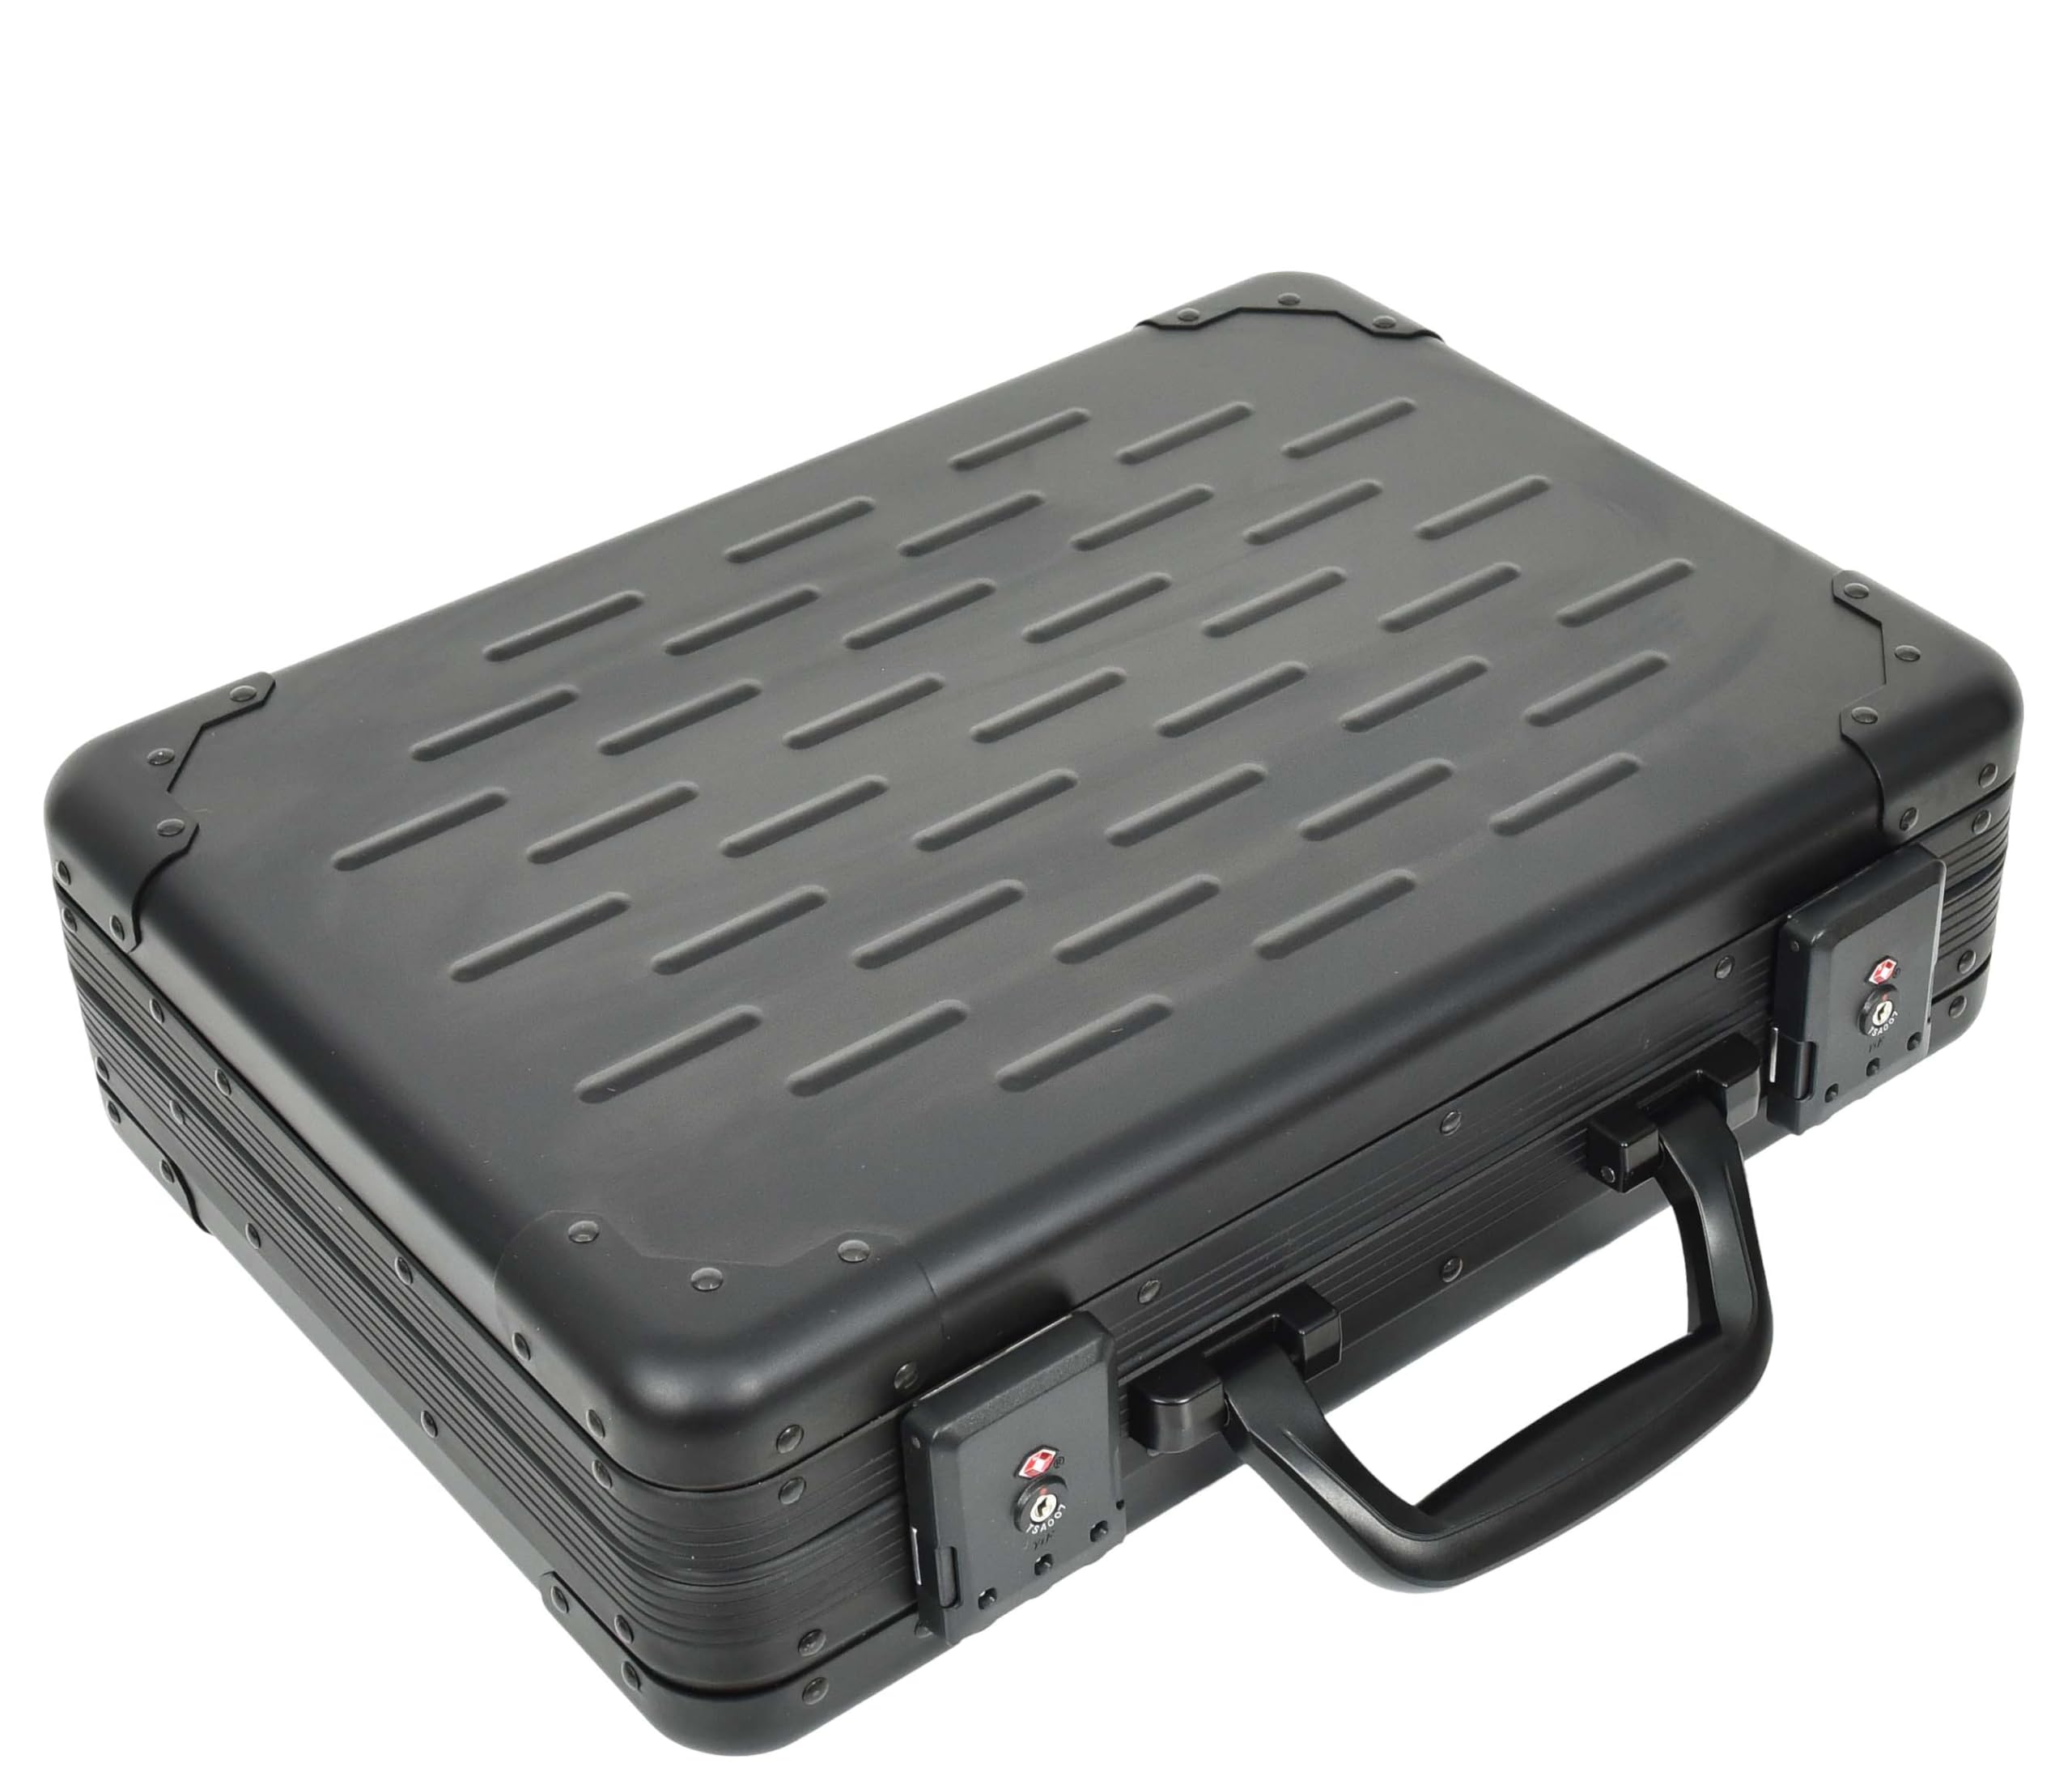 A1 FASHION GOODS Attache Case Black Aluminium Classic Dual TSA Lock Briefcase Business Bag Agent, Black, Contemporary